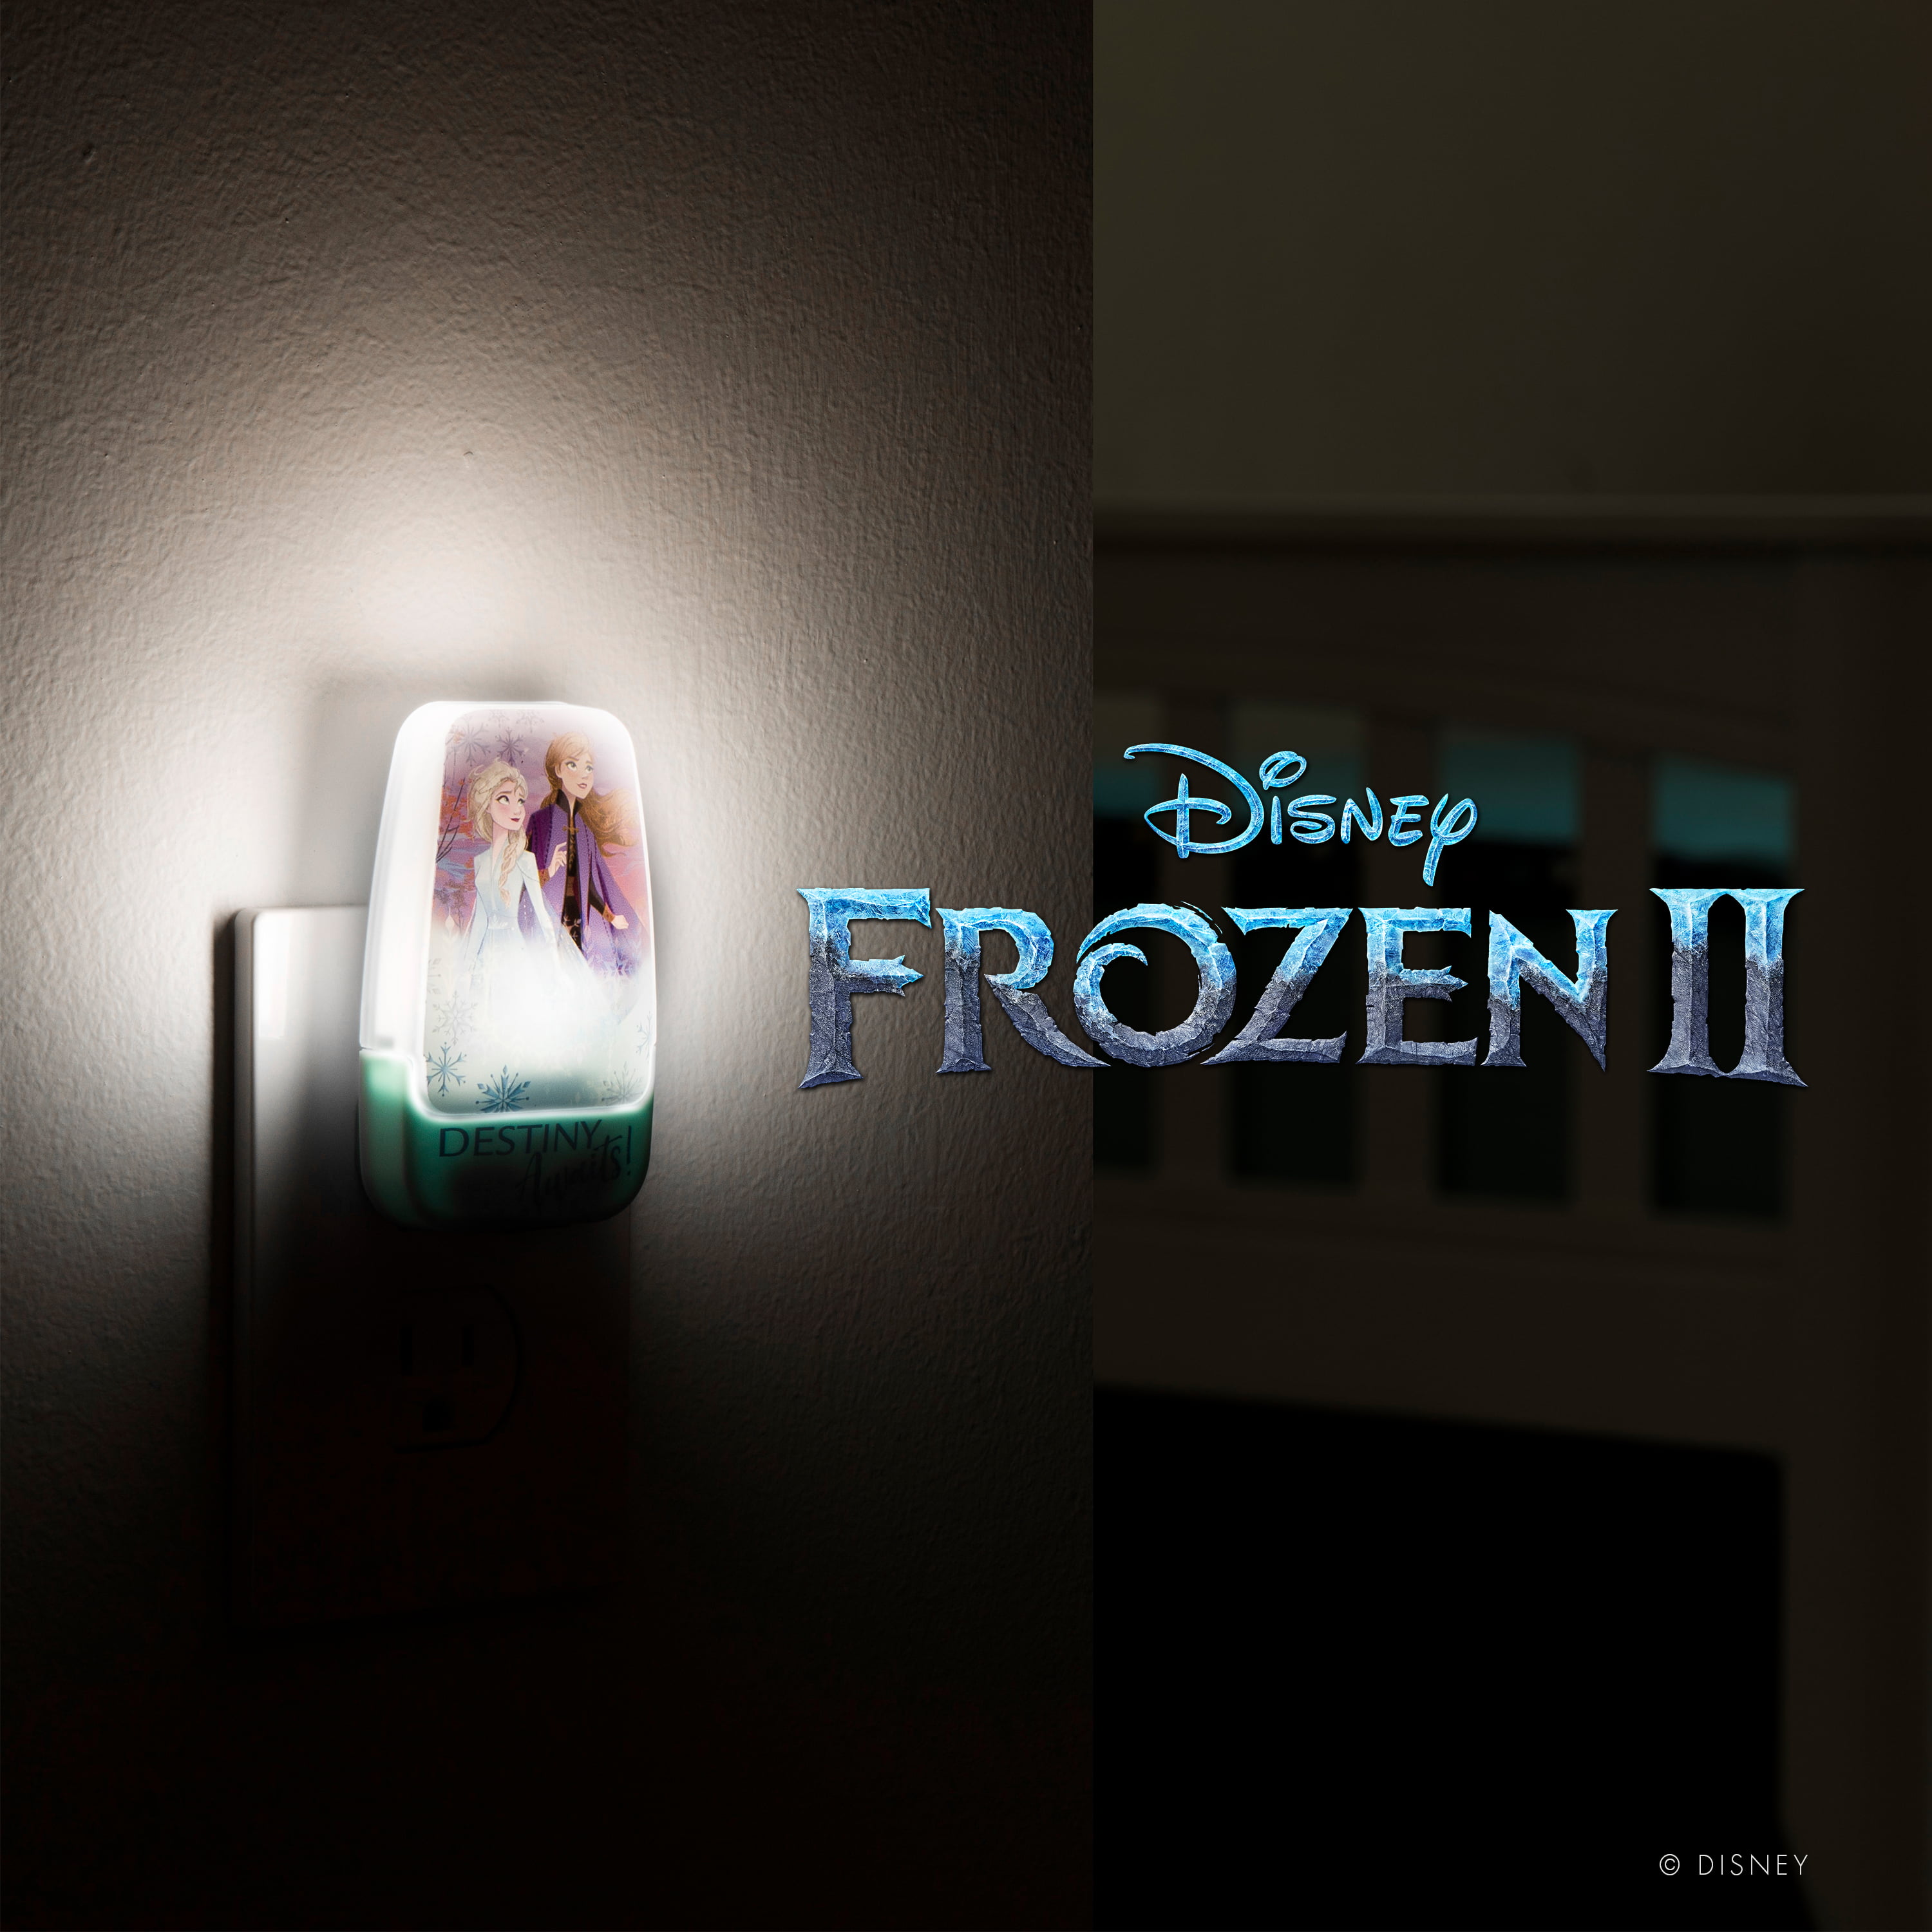 Disney Frozen 2 LED Night Light Princess Anna & Elsa